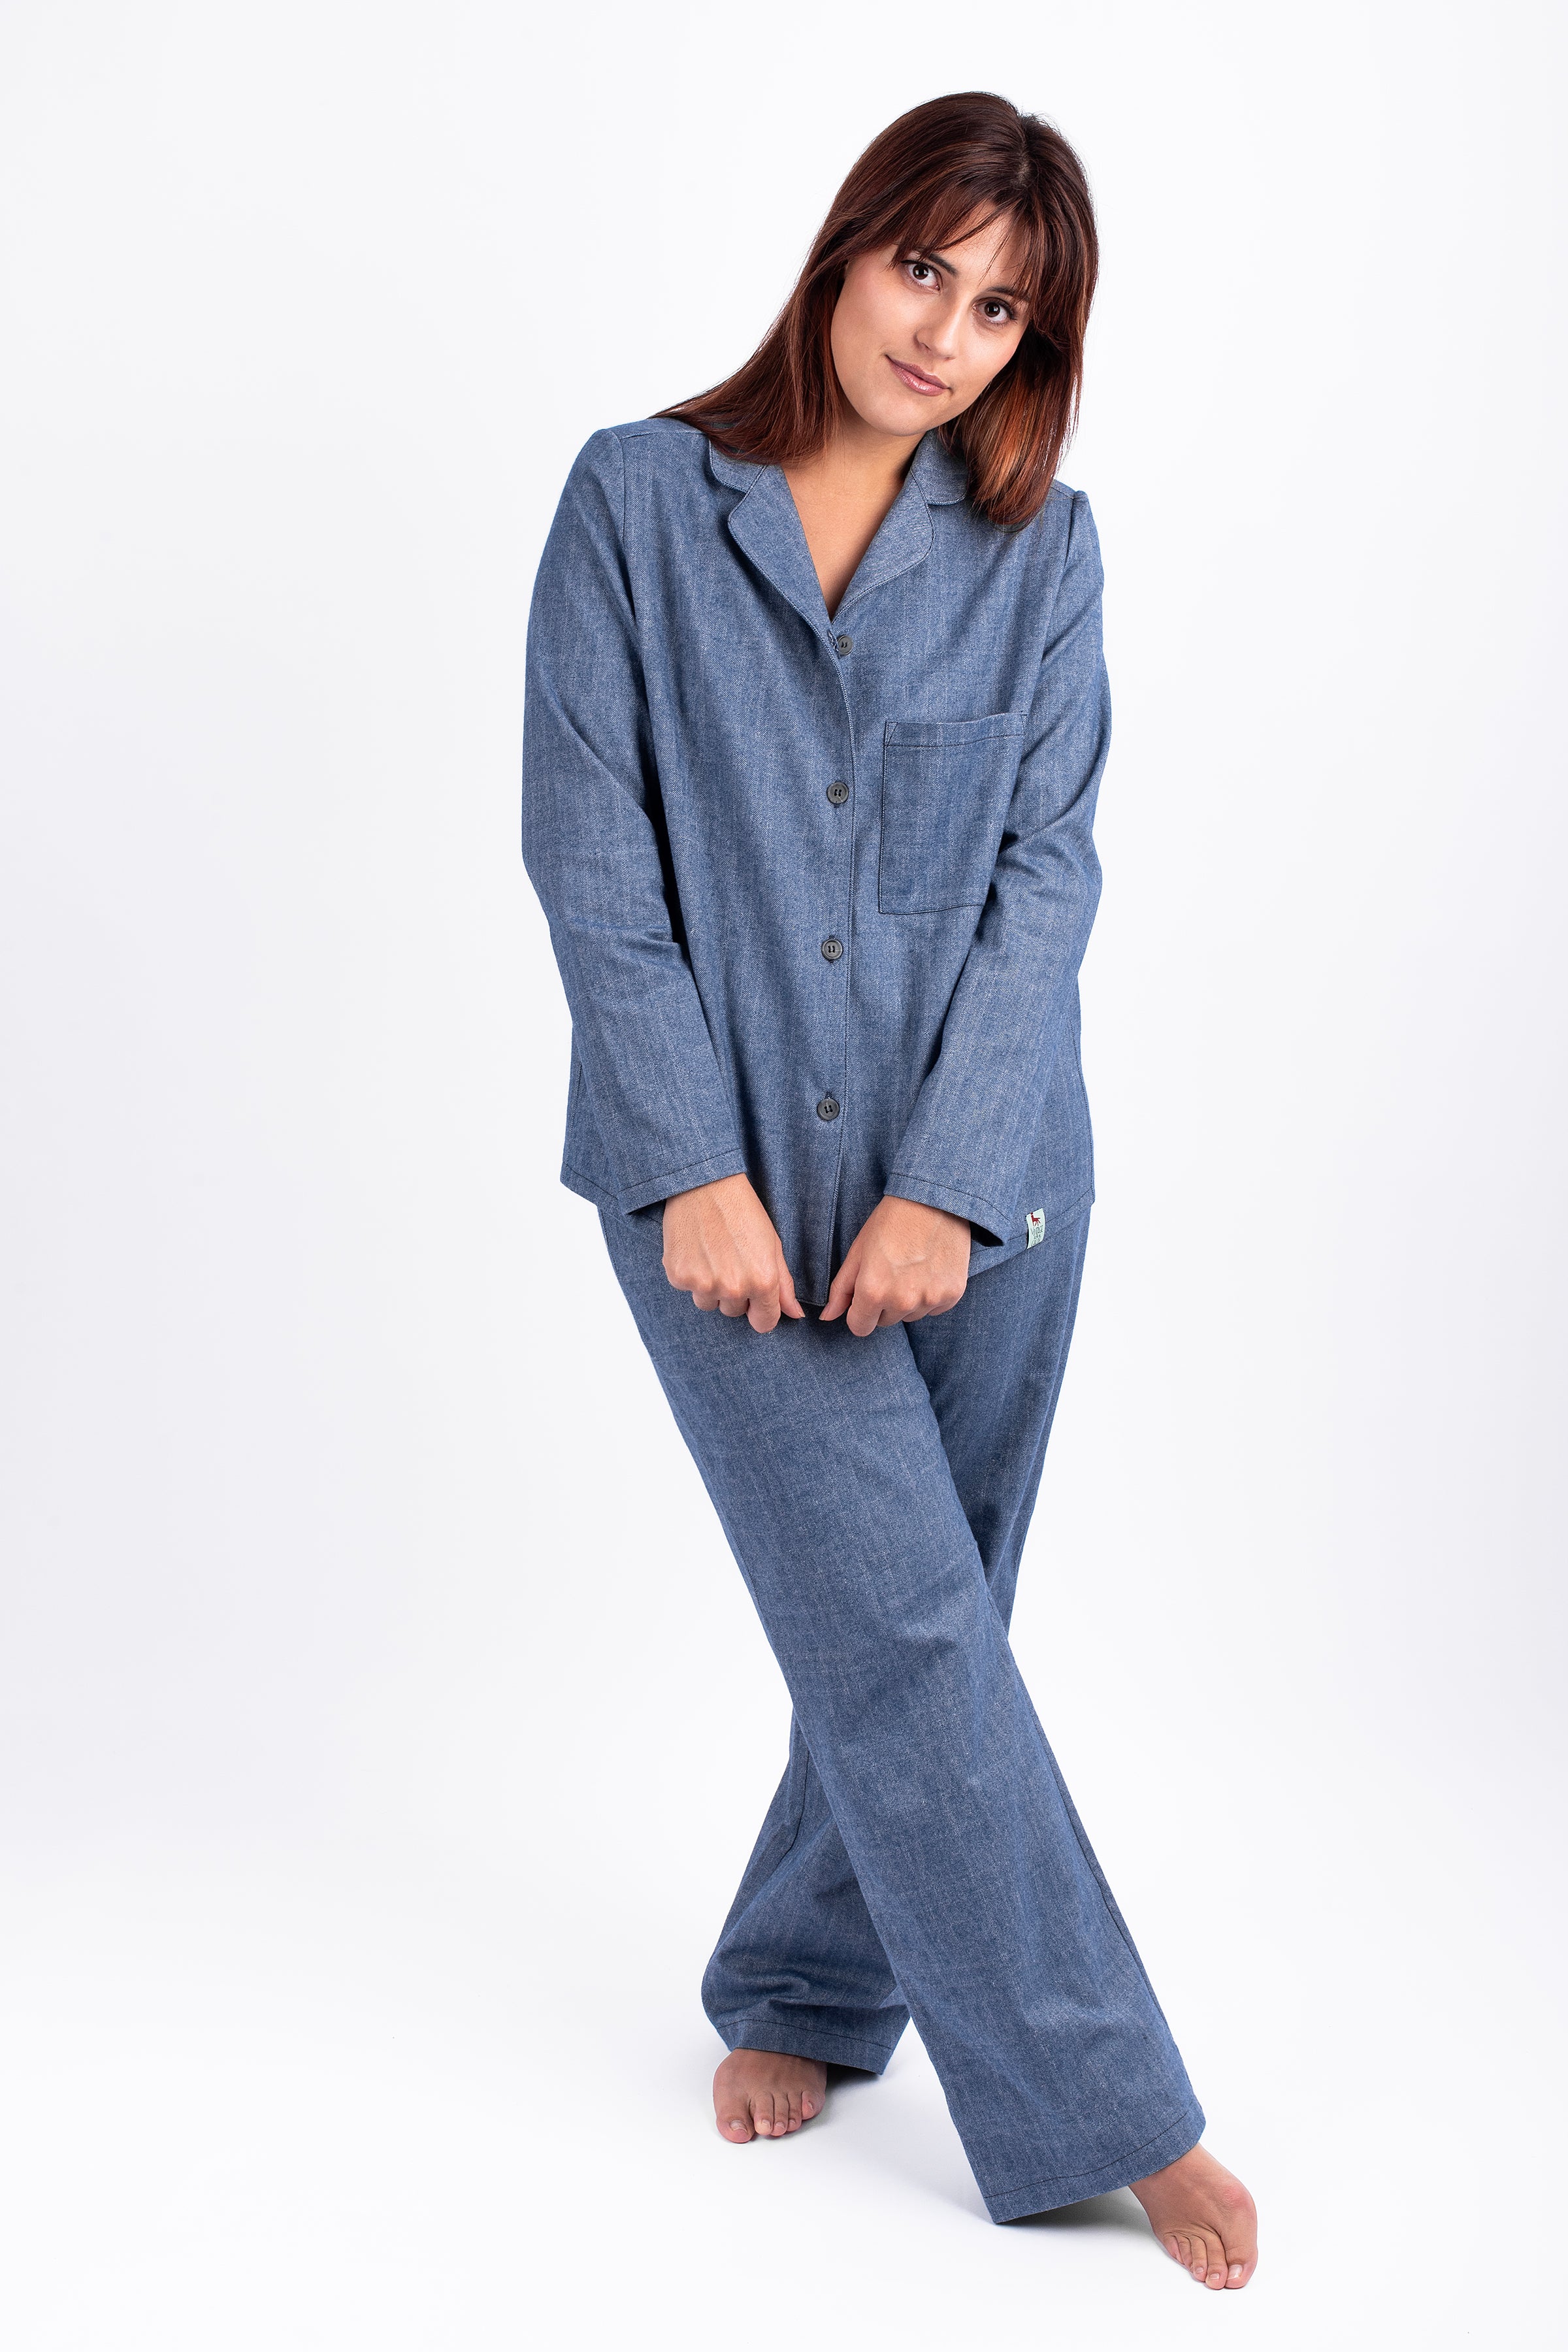 Upcycled Long Pyjama Flannel Blue